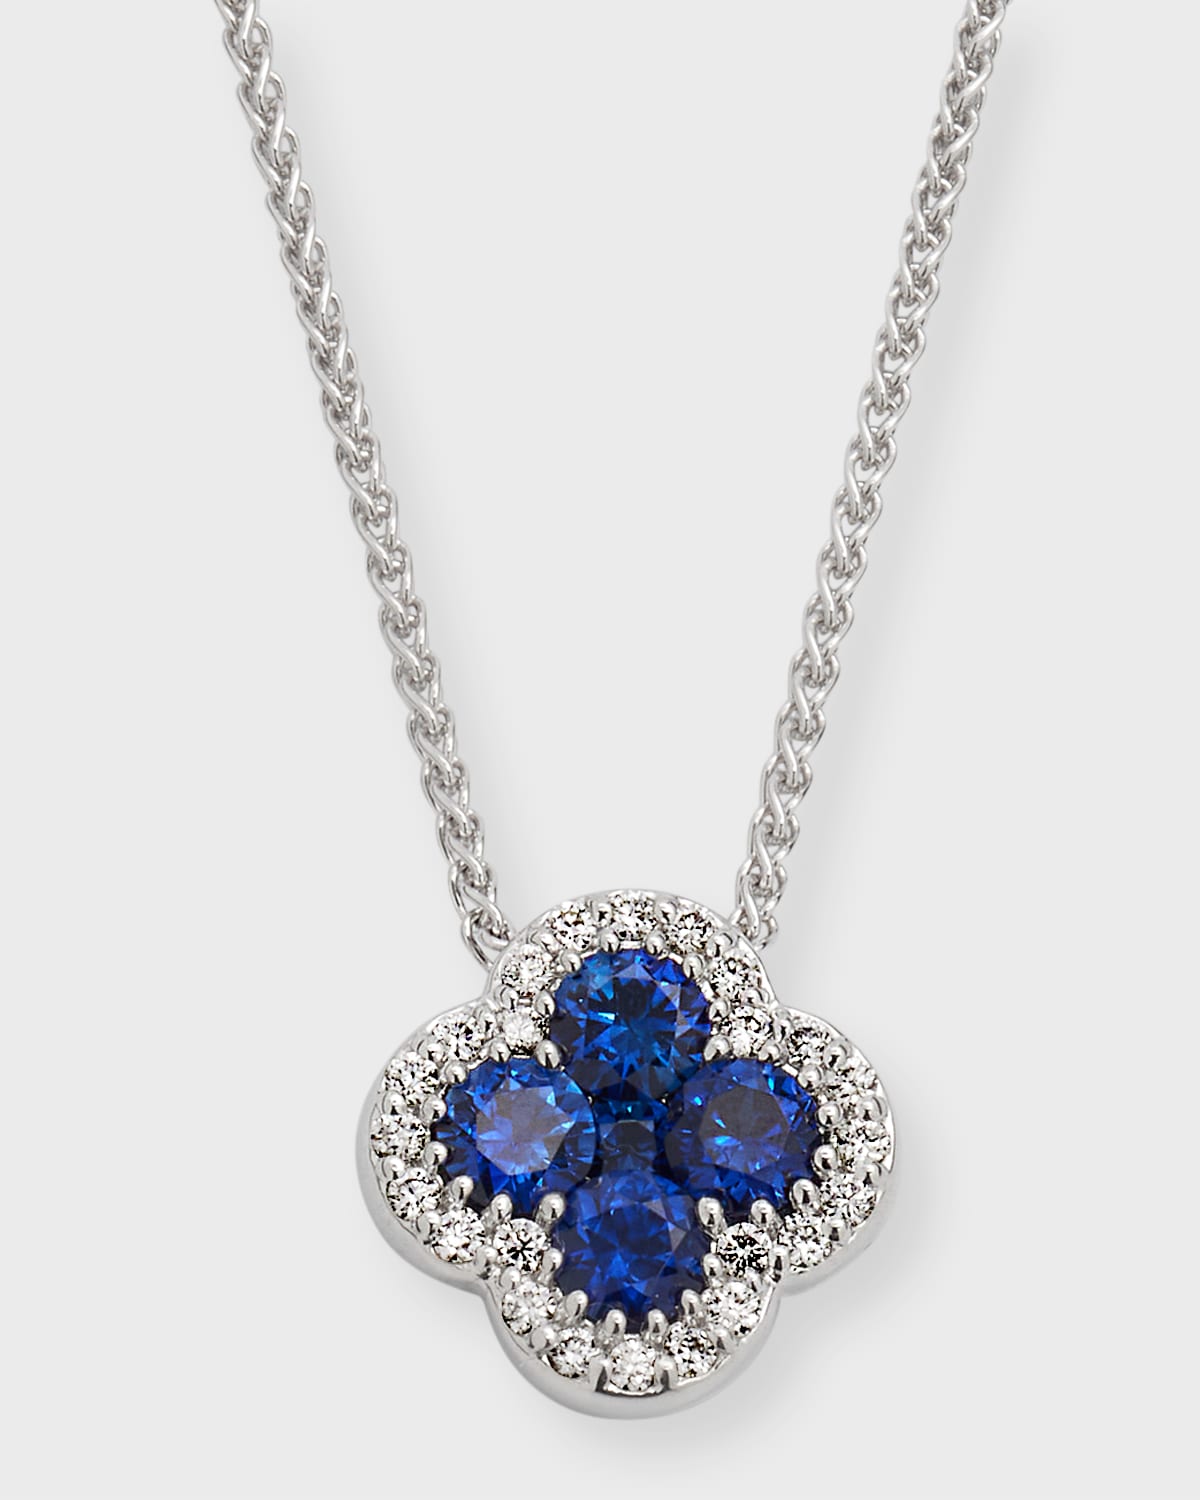 Neiman Marcus Diamonds 18k White Gold Diamond And Sapphire Pendant Necklace